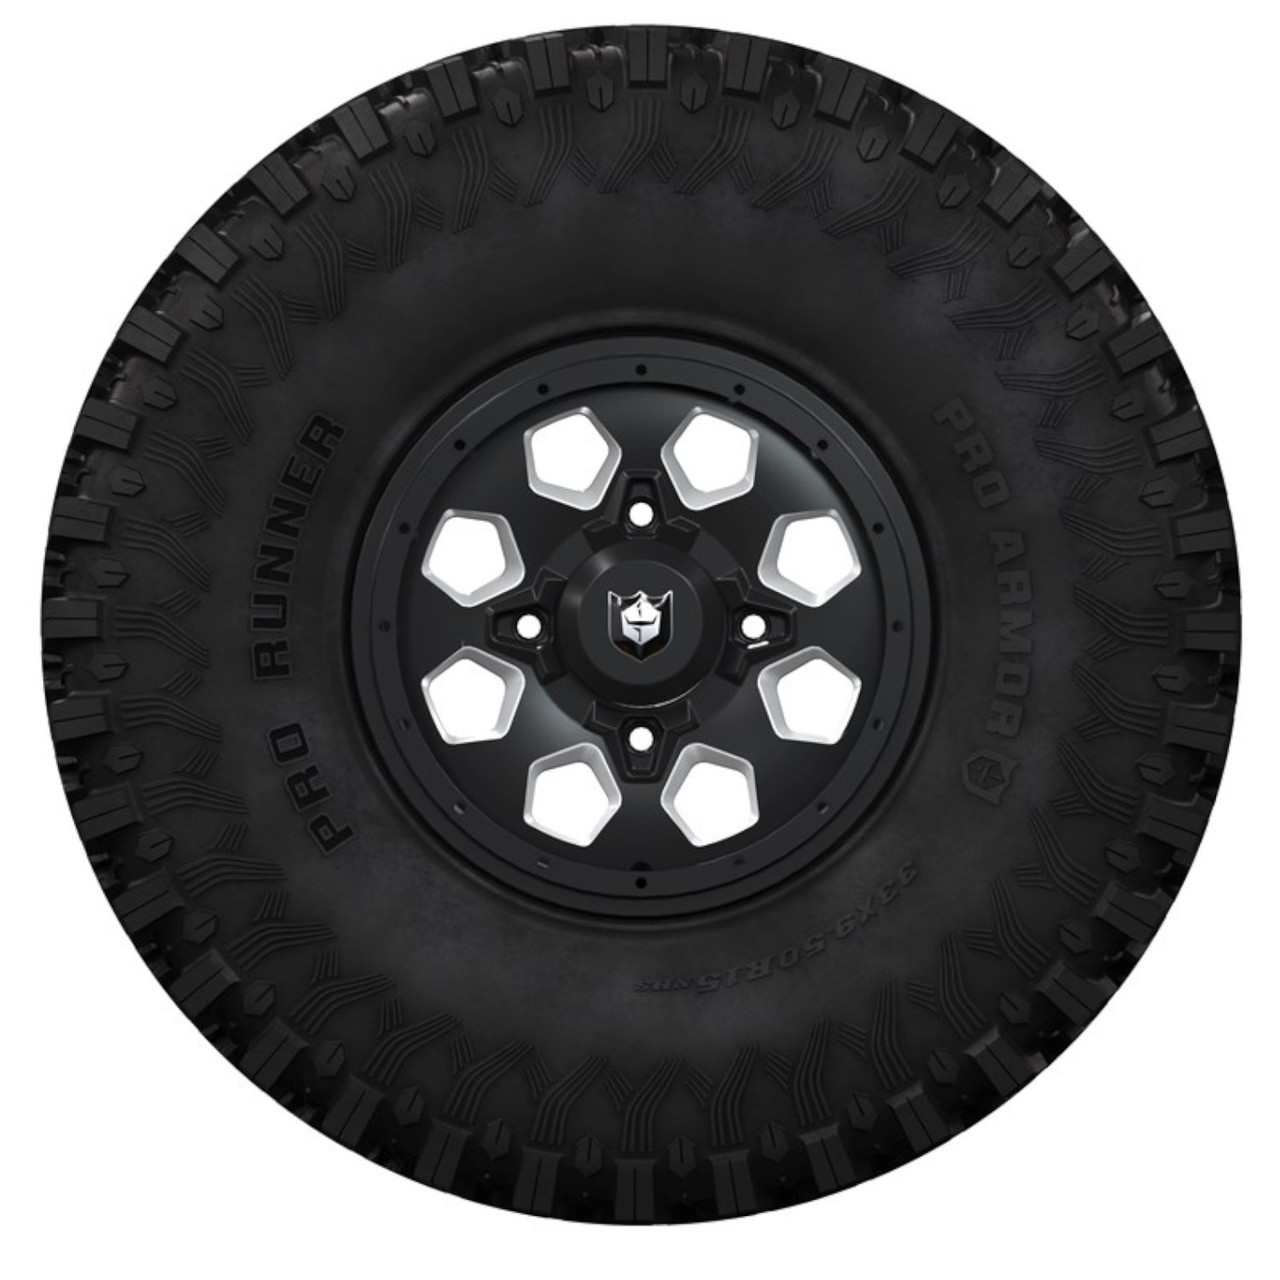 Polaris New OEM, Pro Armor Wheel & Tire Set, Accent Hexlr, 33x9.5R15, 2885042